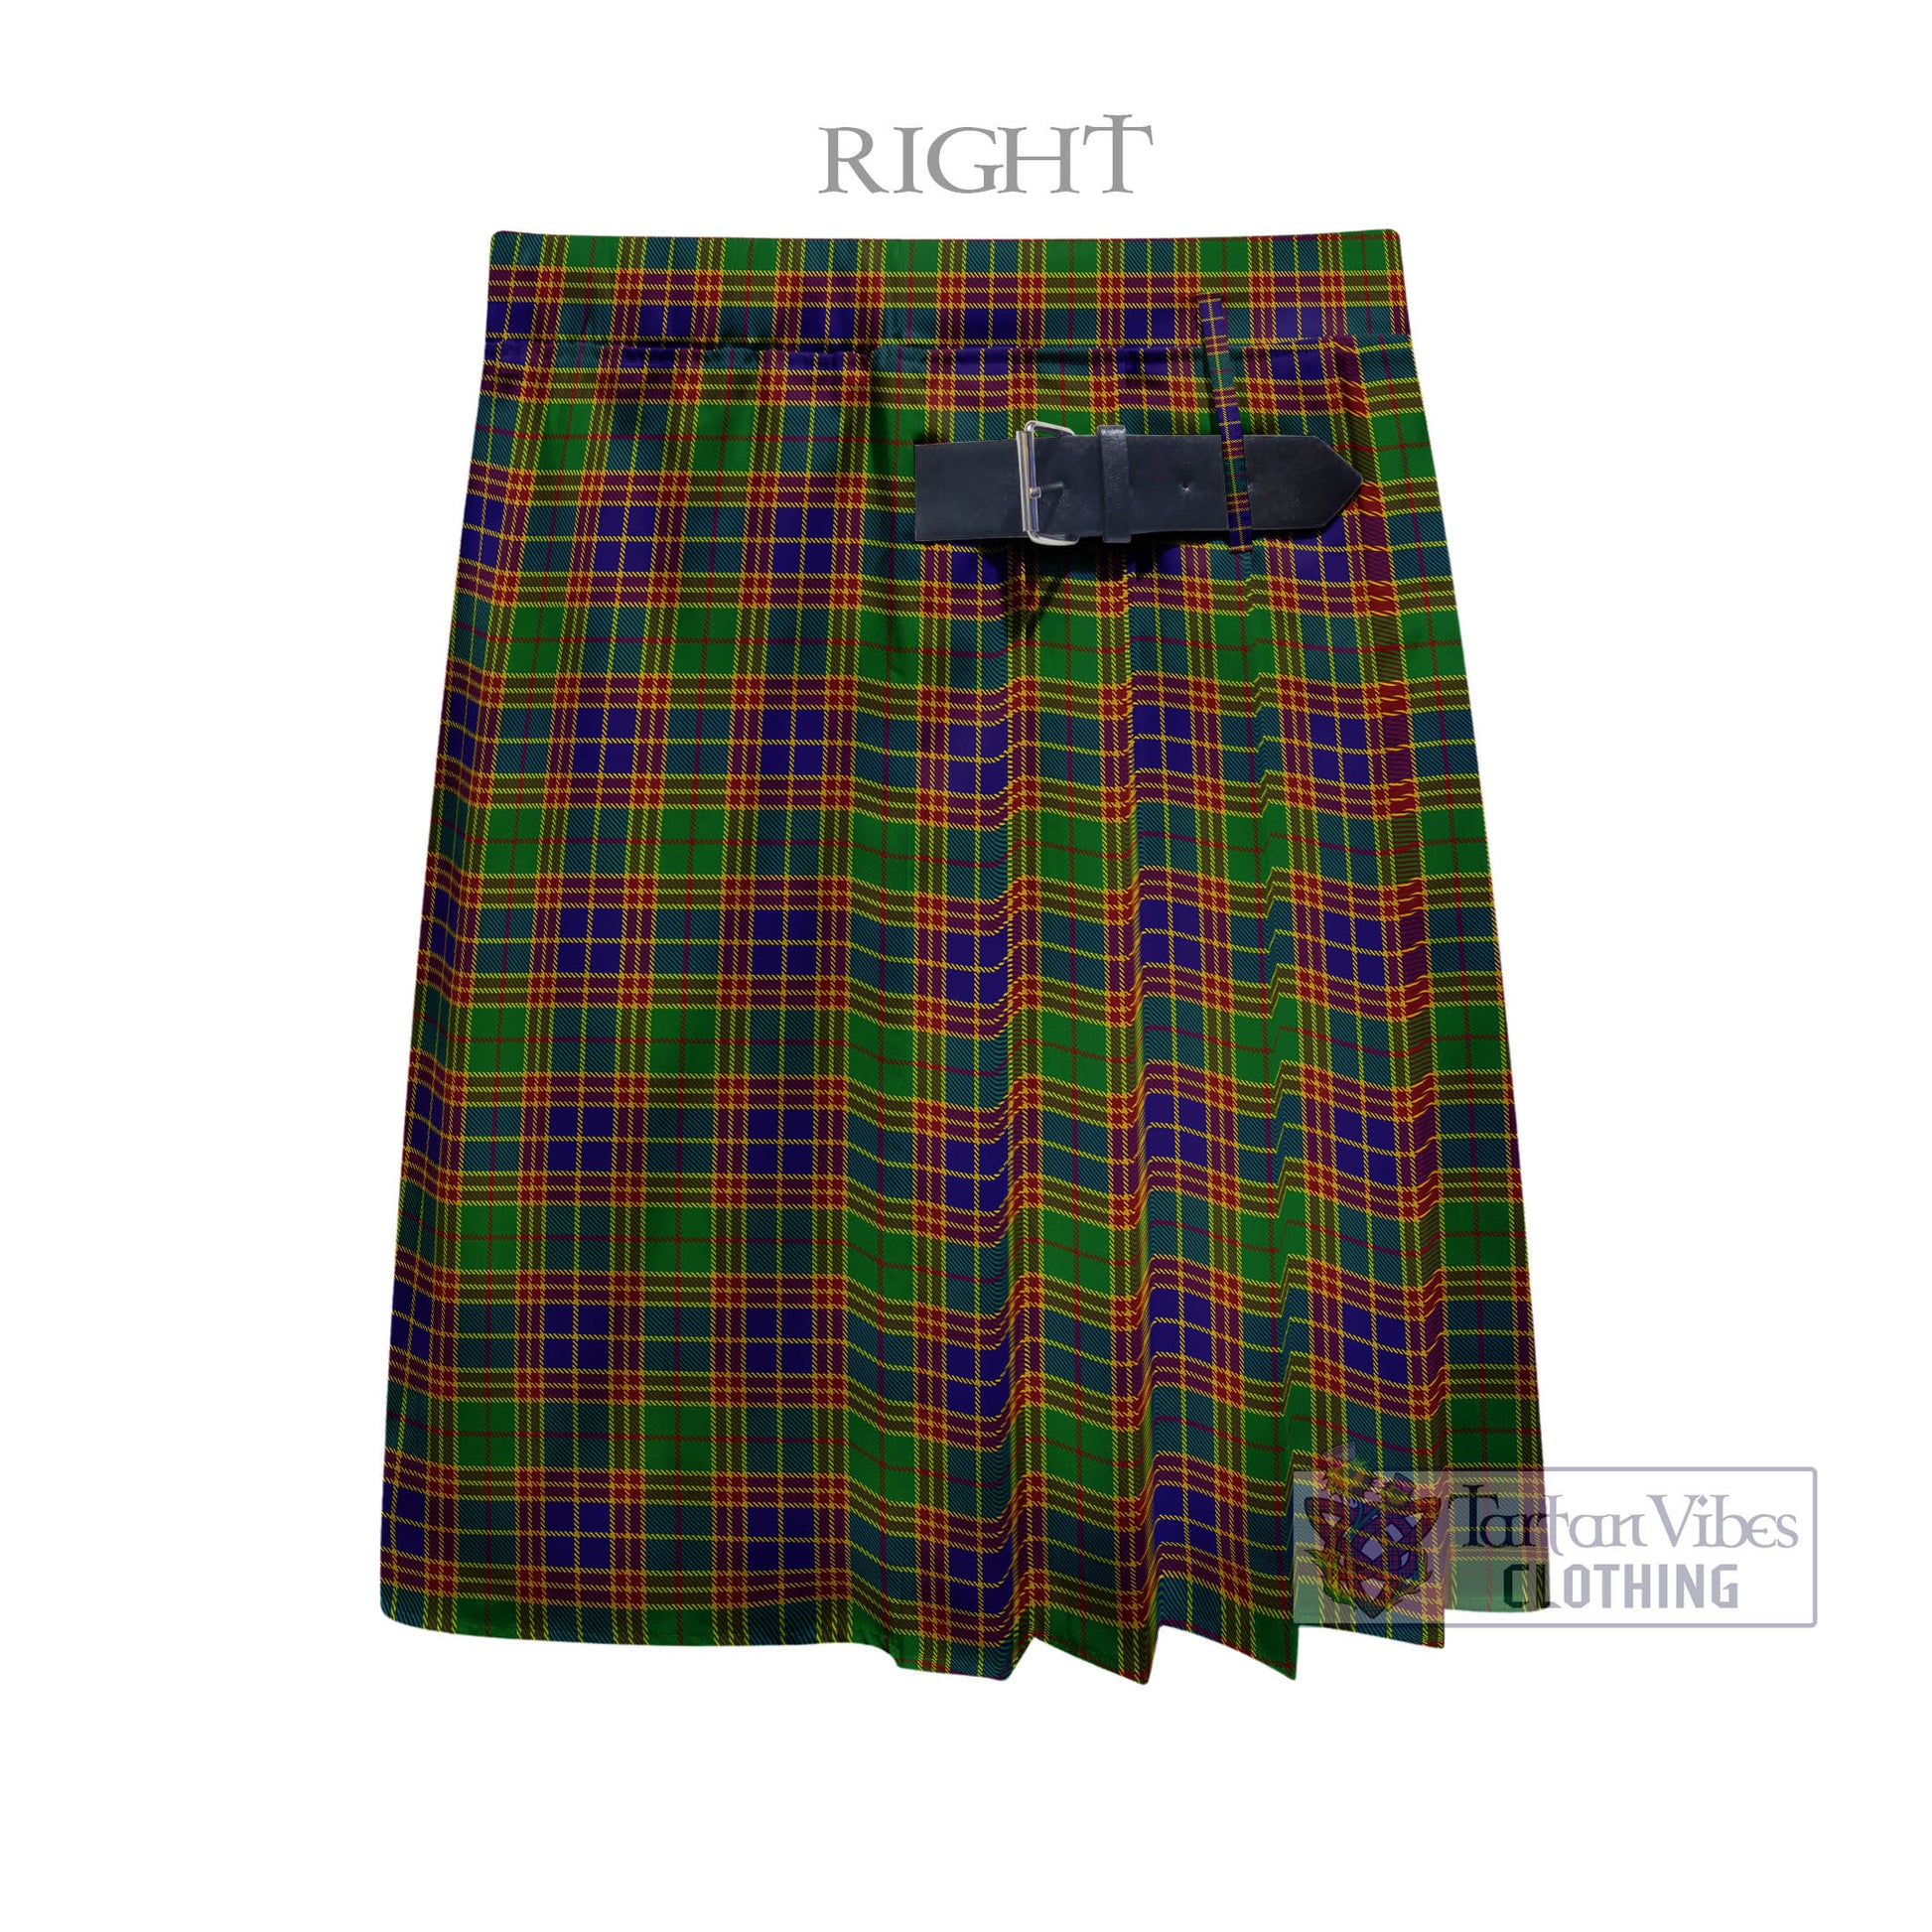 Tartan Vibes Clothing Stephenson Old Tartan Men's Pleated Skirt - Fashion Casual Retro Scottish Style